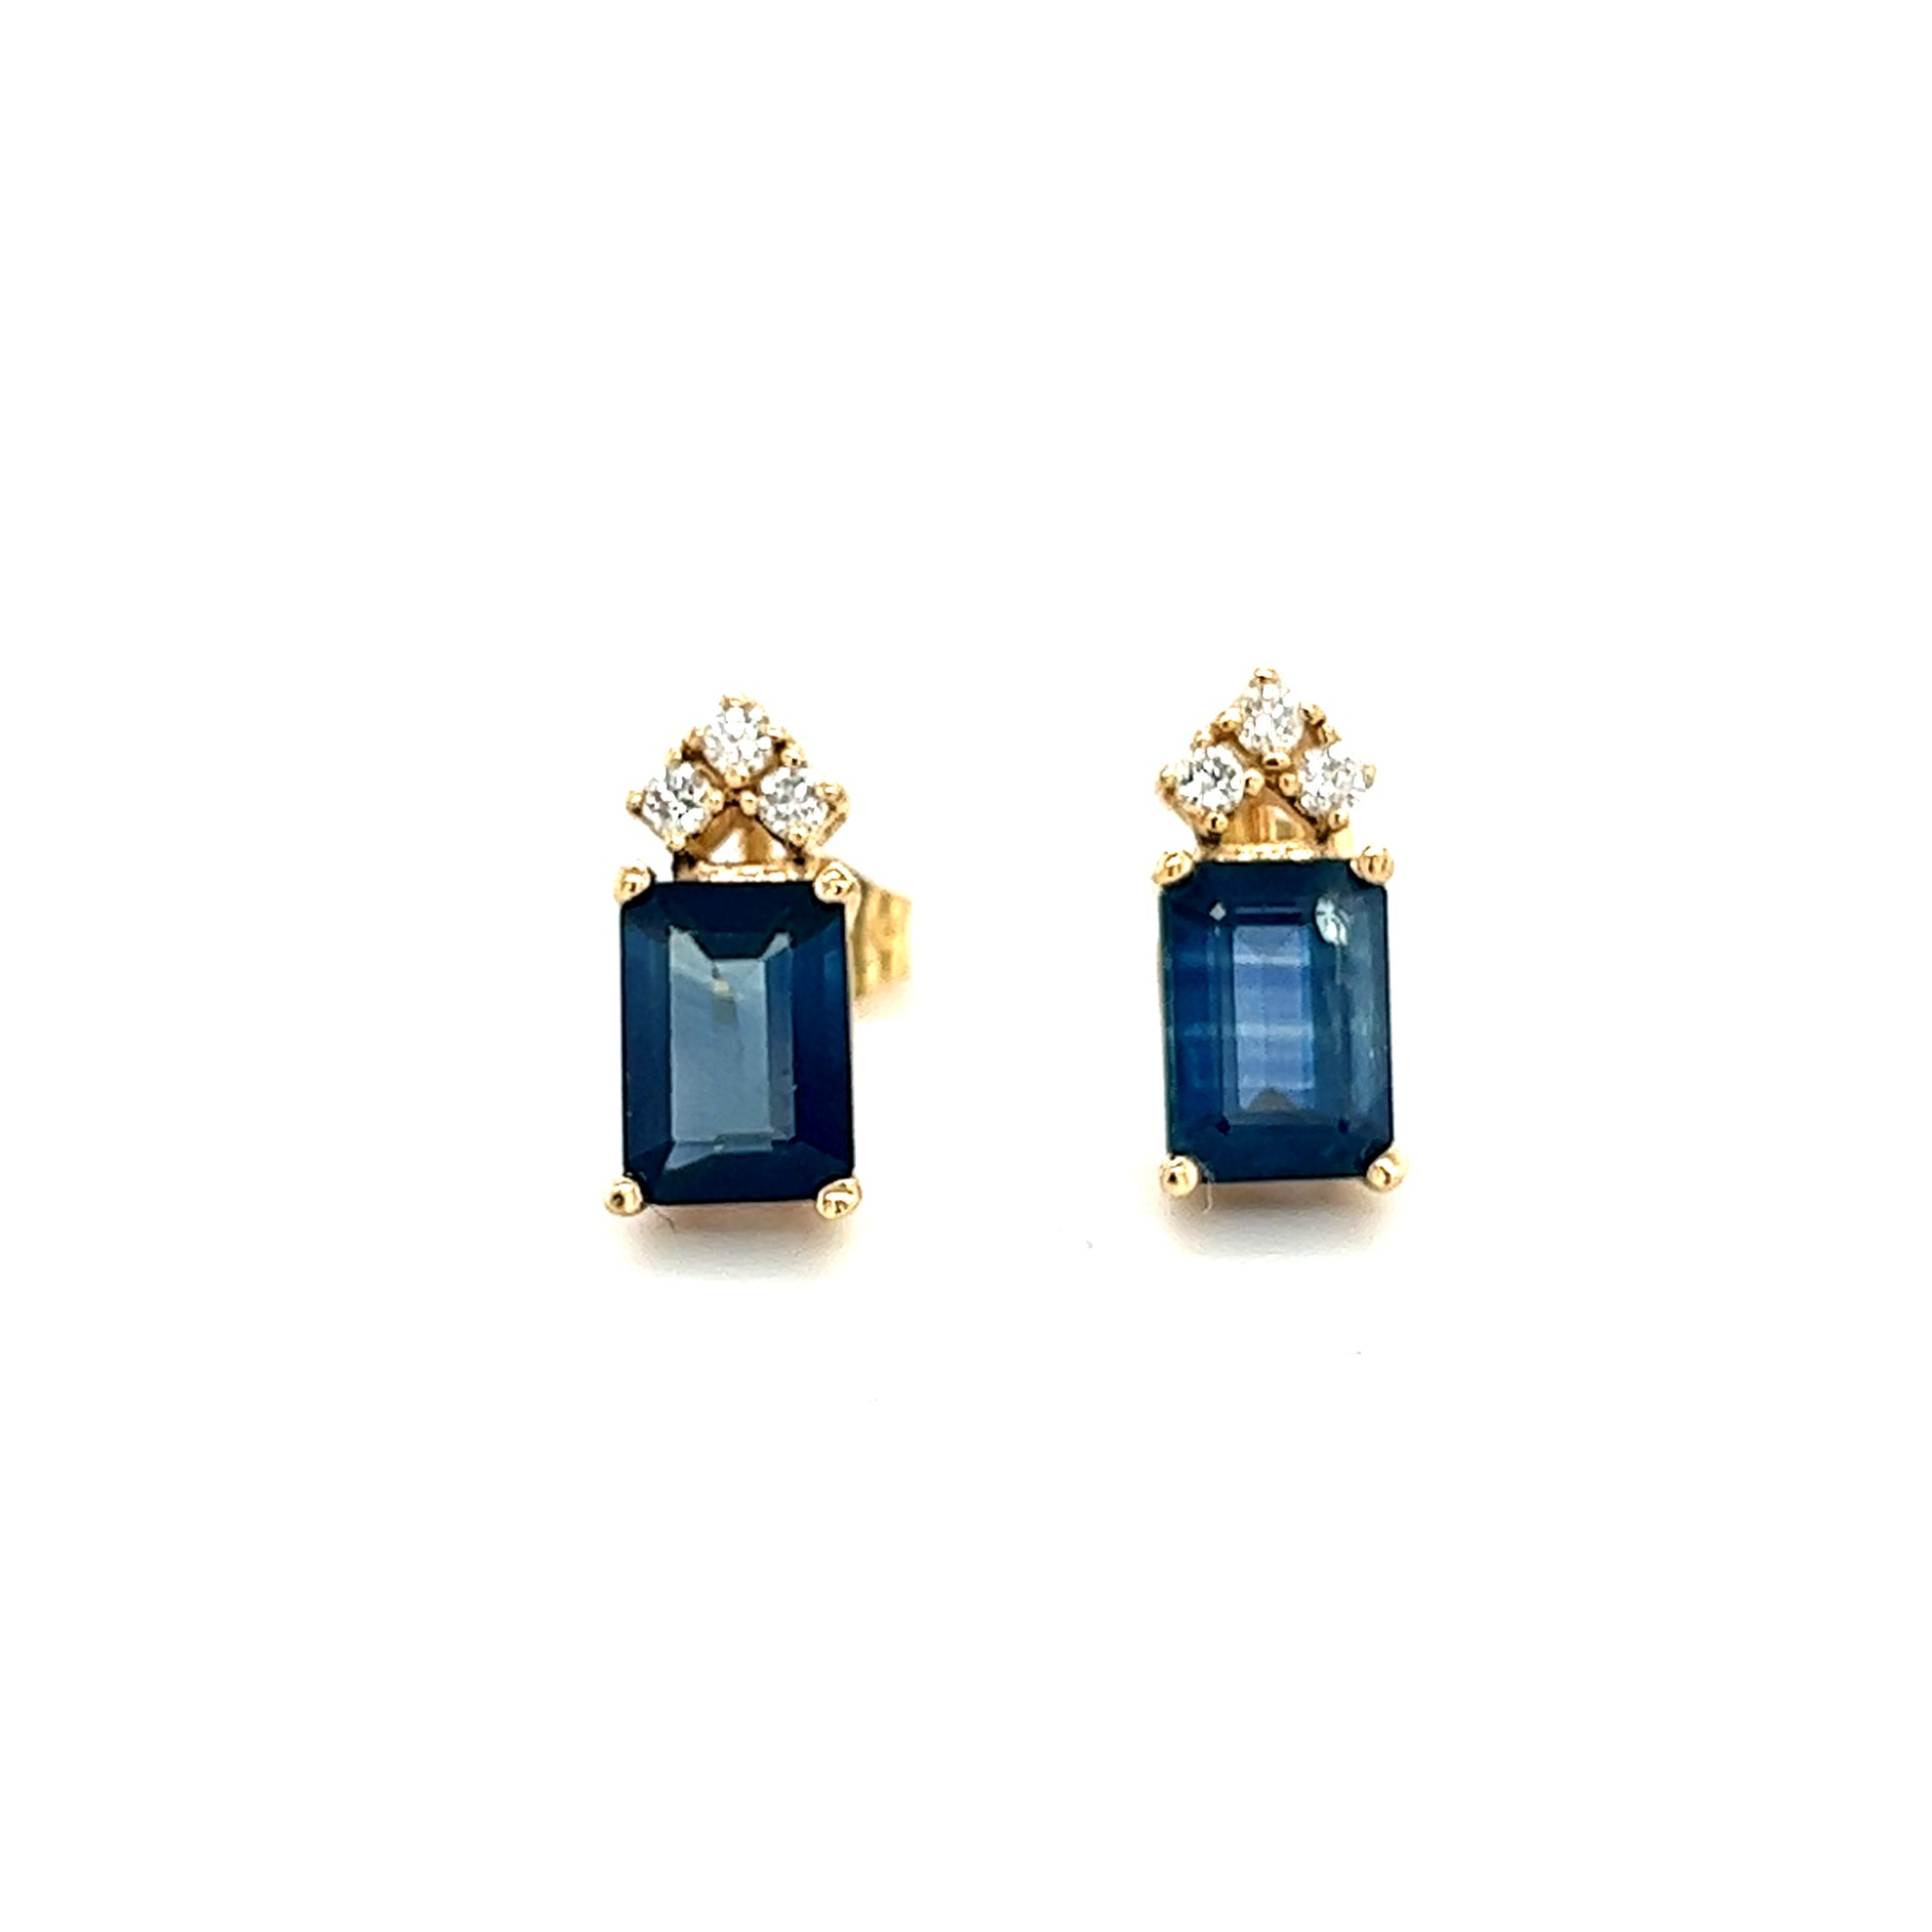 Natural Sapphire Diamond Earrings 14k Gold 2.14 TCW Certified $2,950 121247 - Certified Estate Jewelry